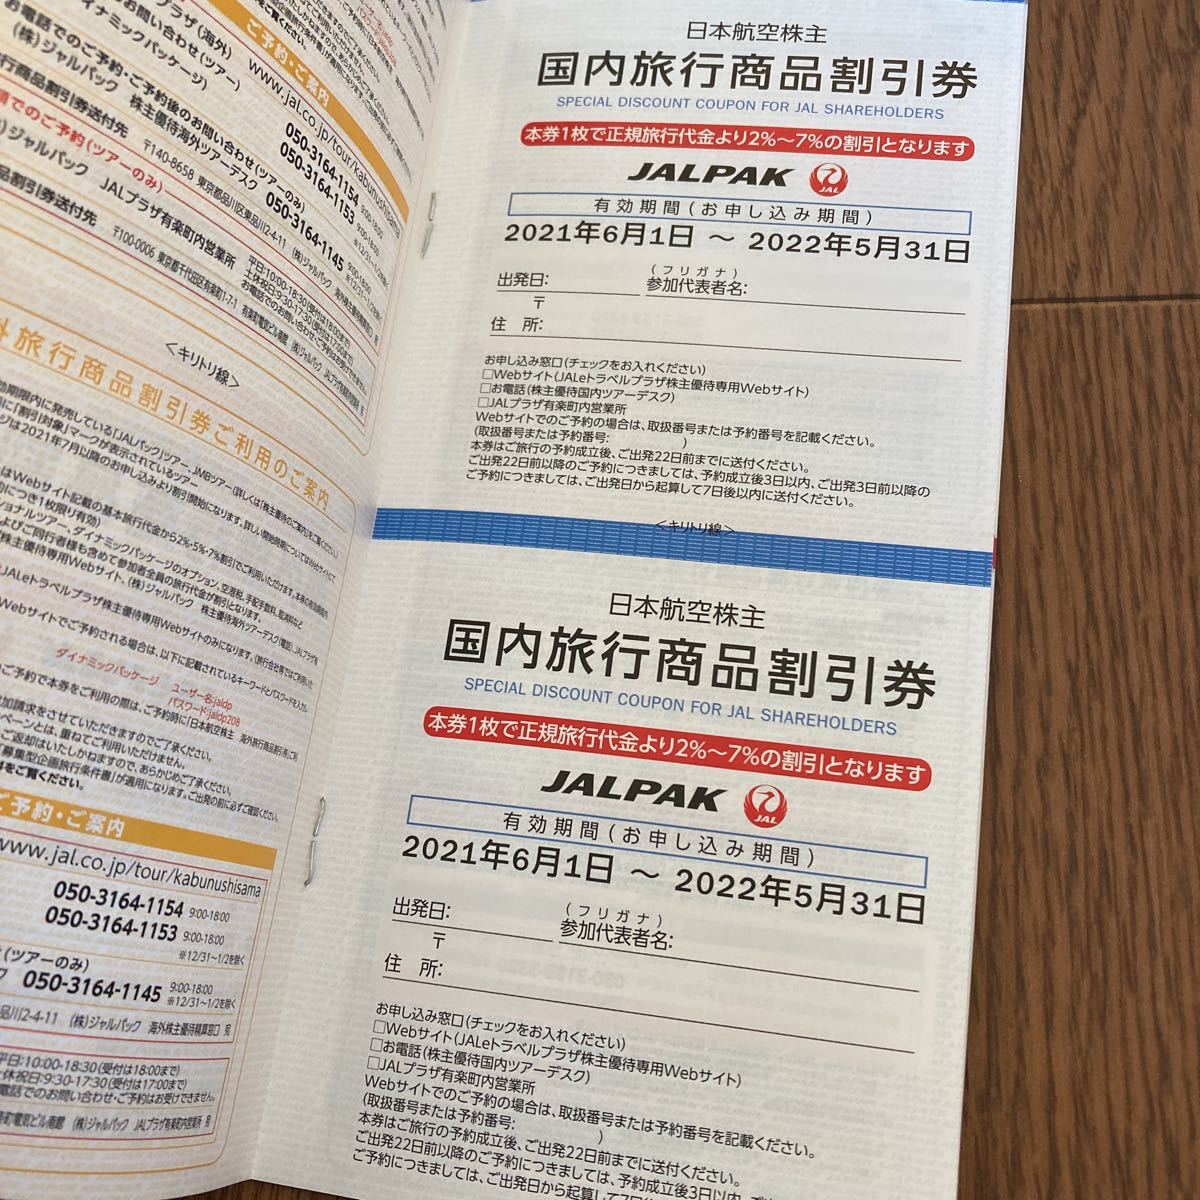 送料無料 日本航空 JAL 株主優待券 海外旅行商品/国内旅行商品 割引券 海外ツアー 2冊 2022/5/31まで_画像4